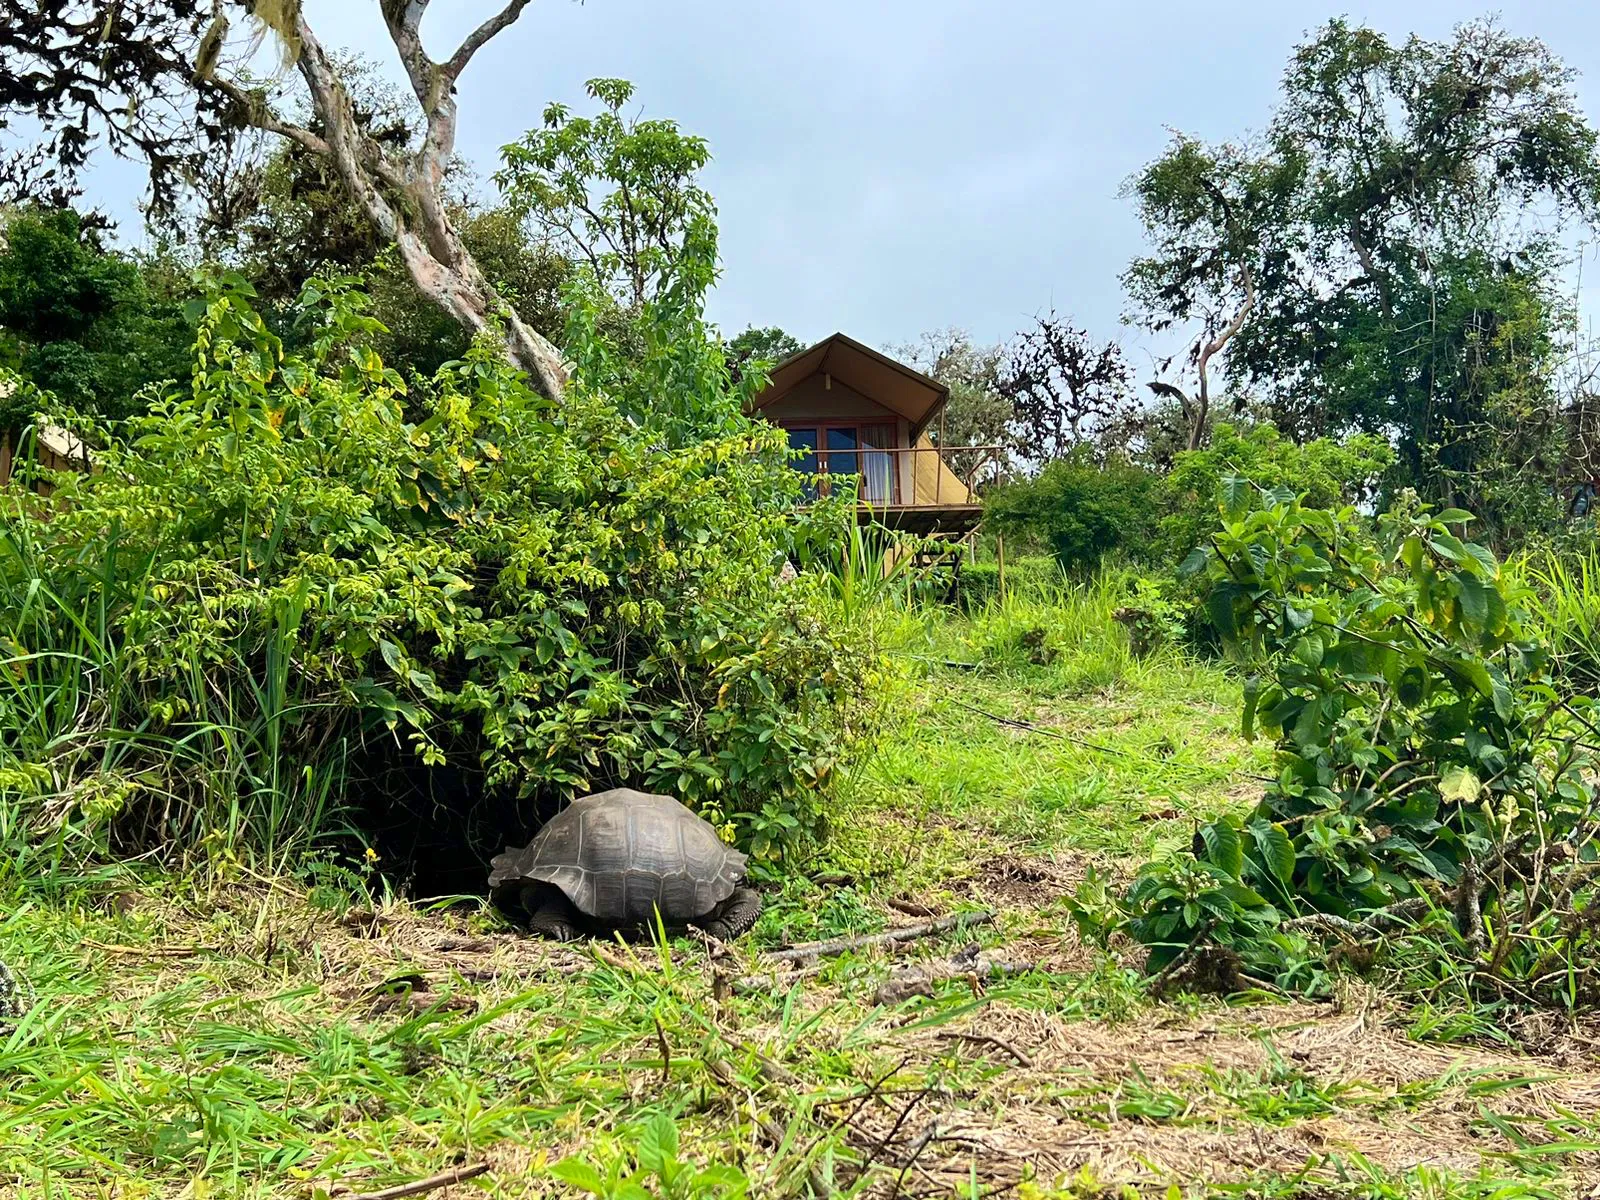 Giant tortoises are often at Galapagos Safari Camp in September